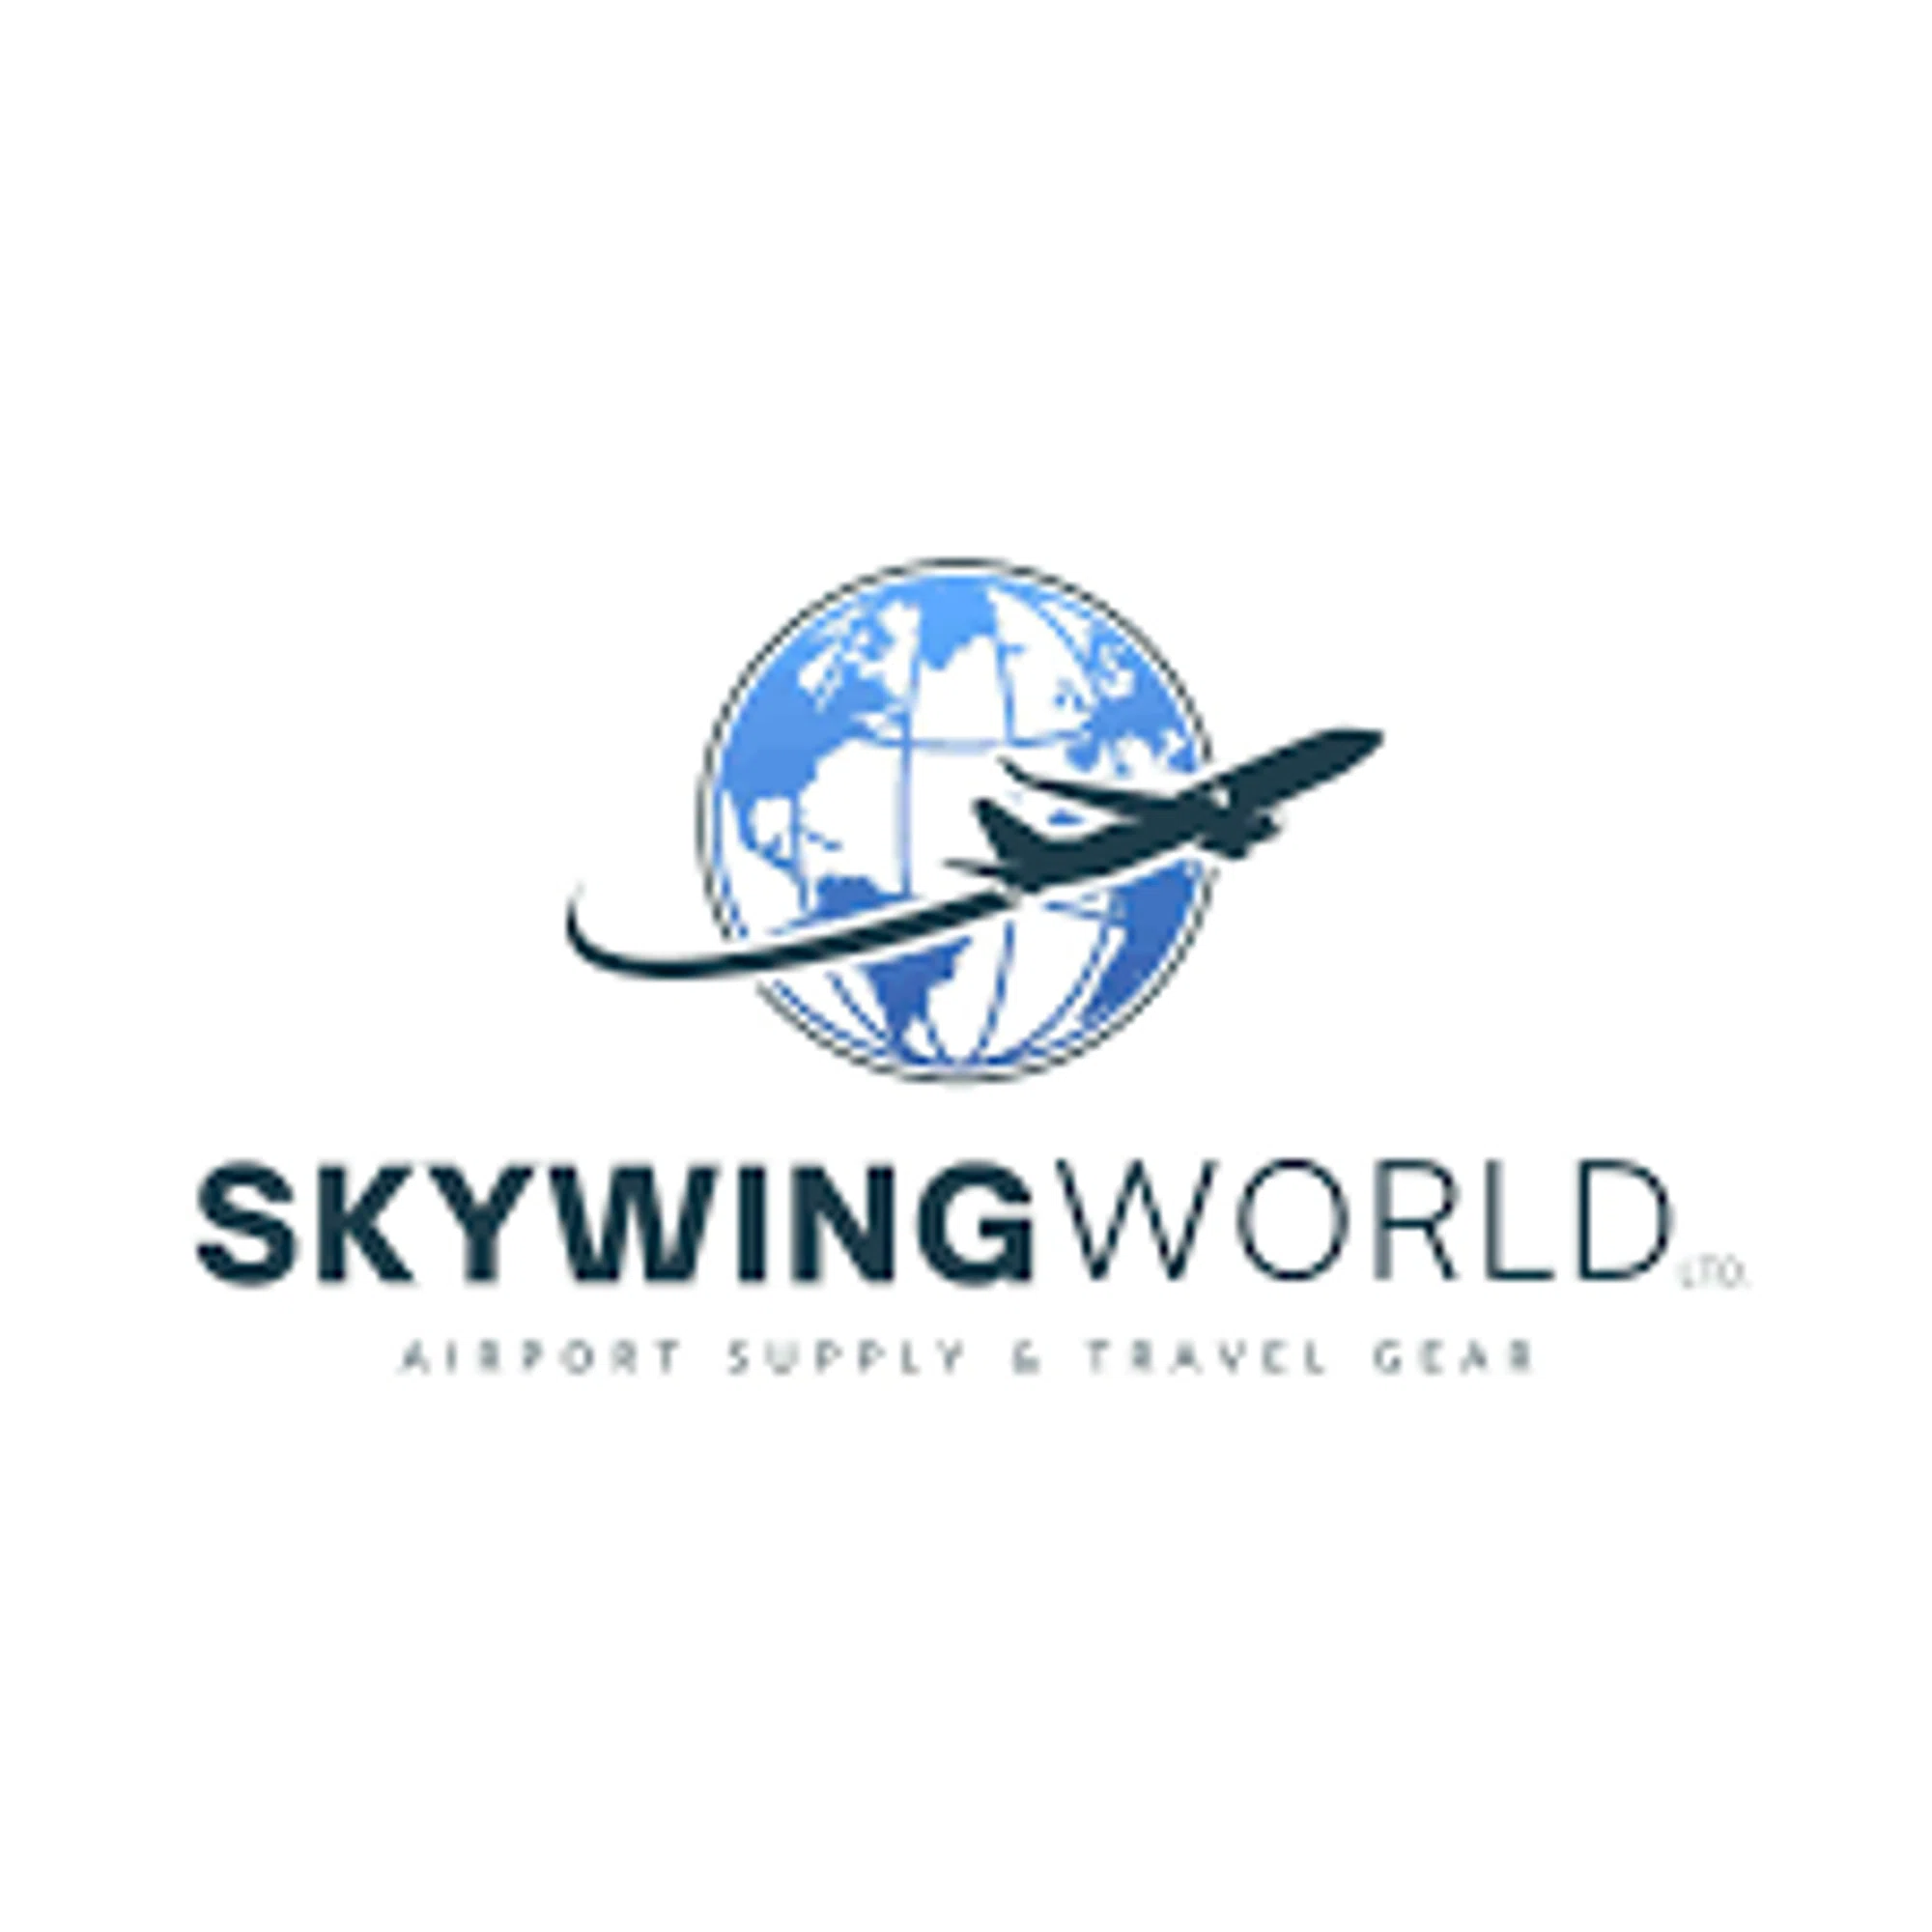 Skywing World